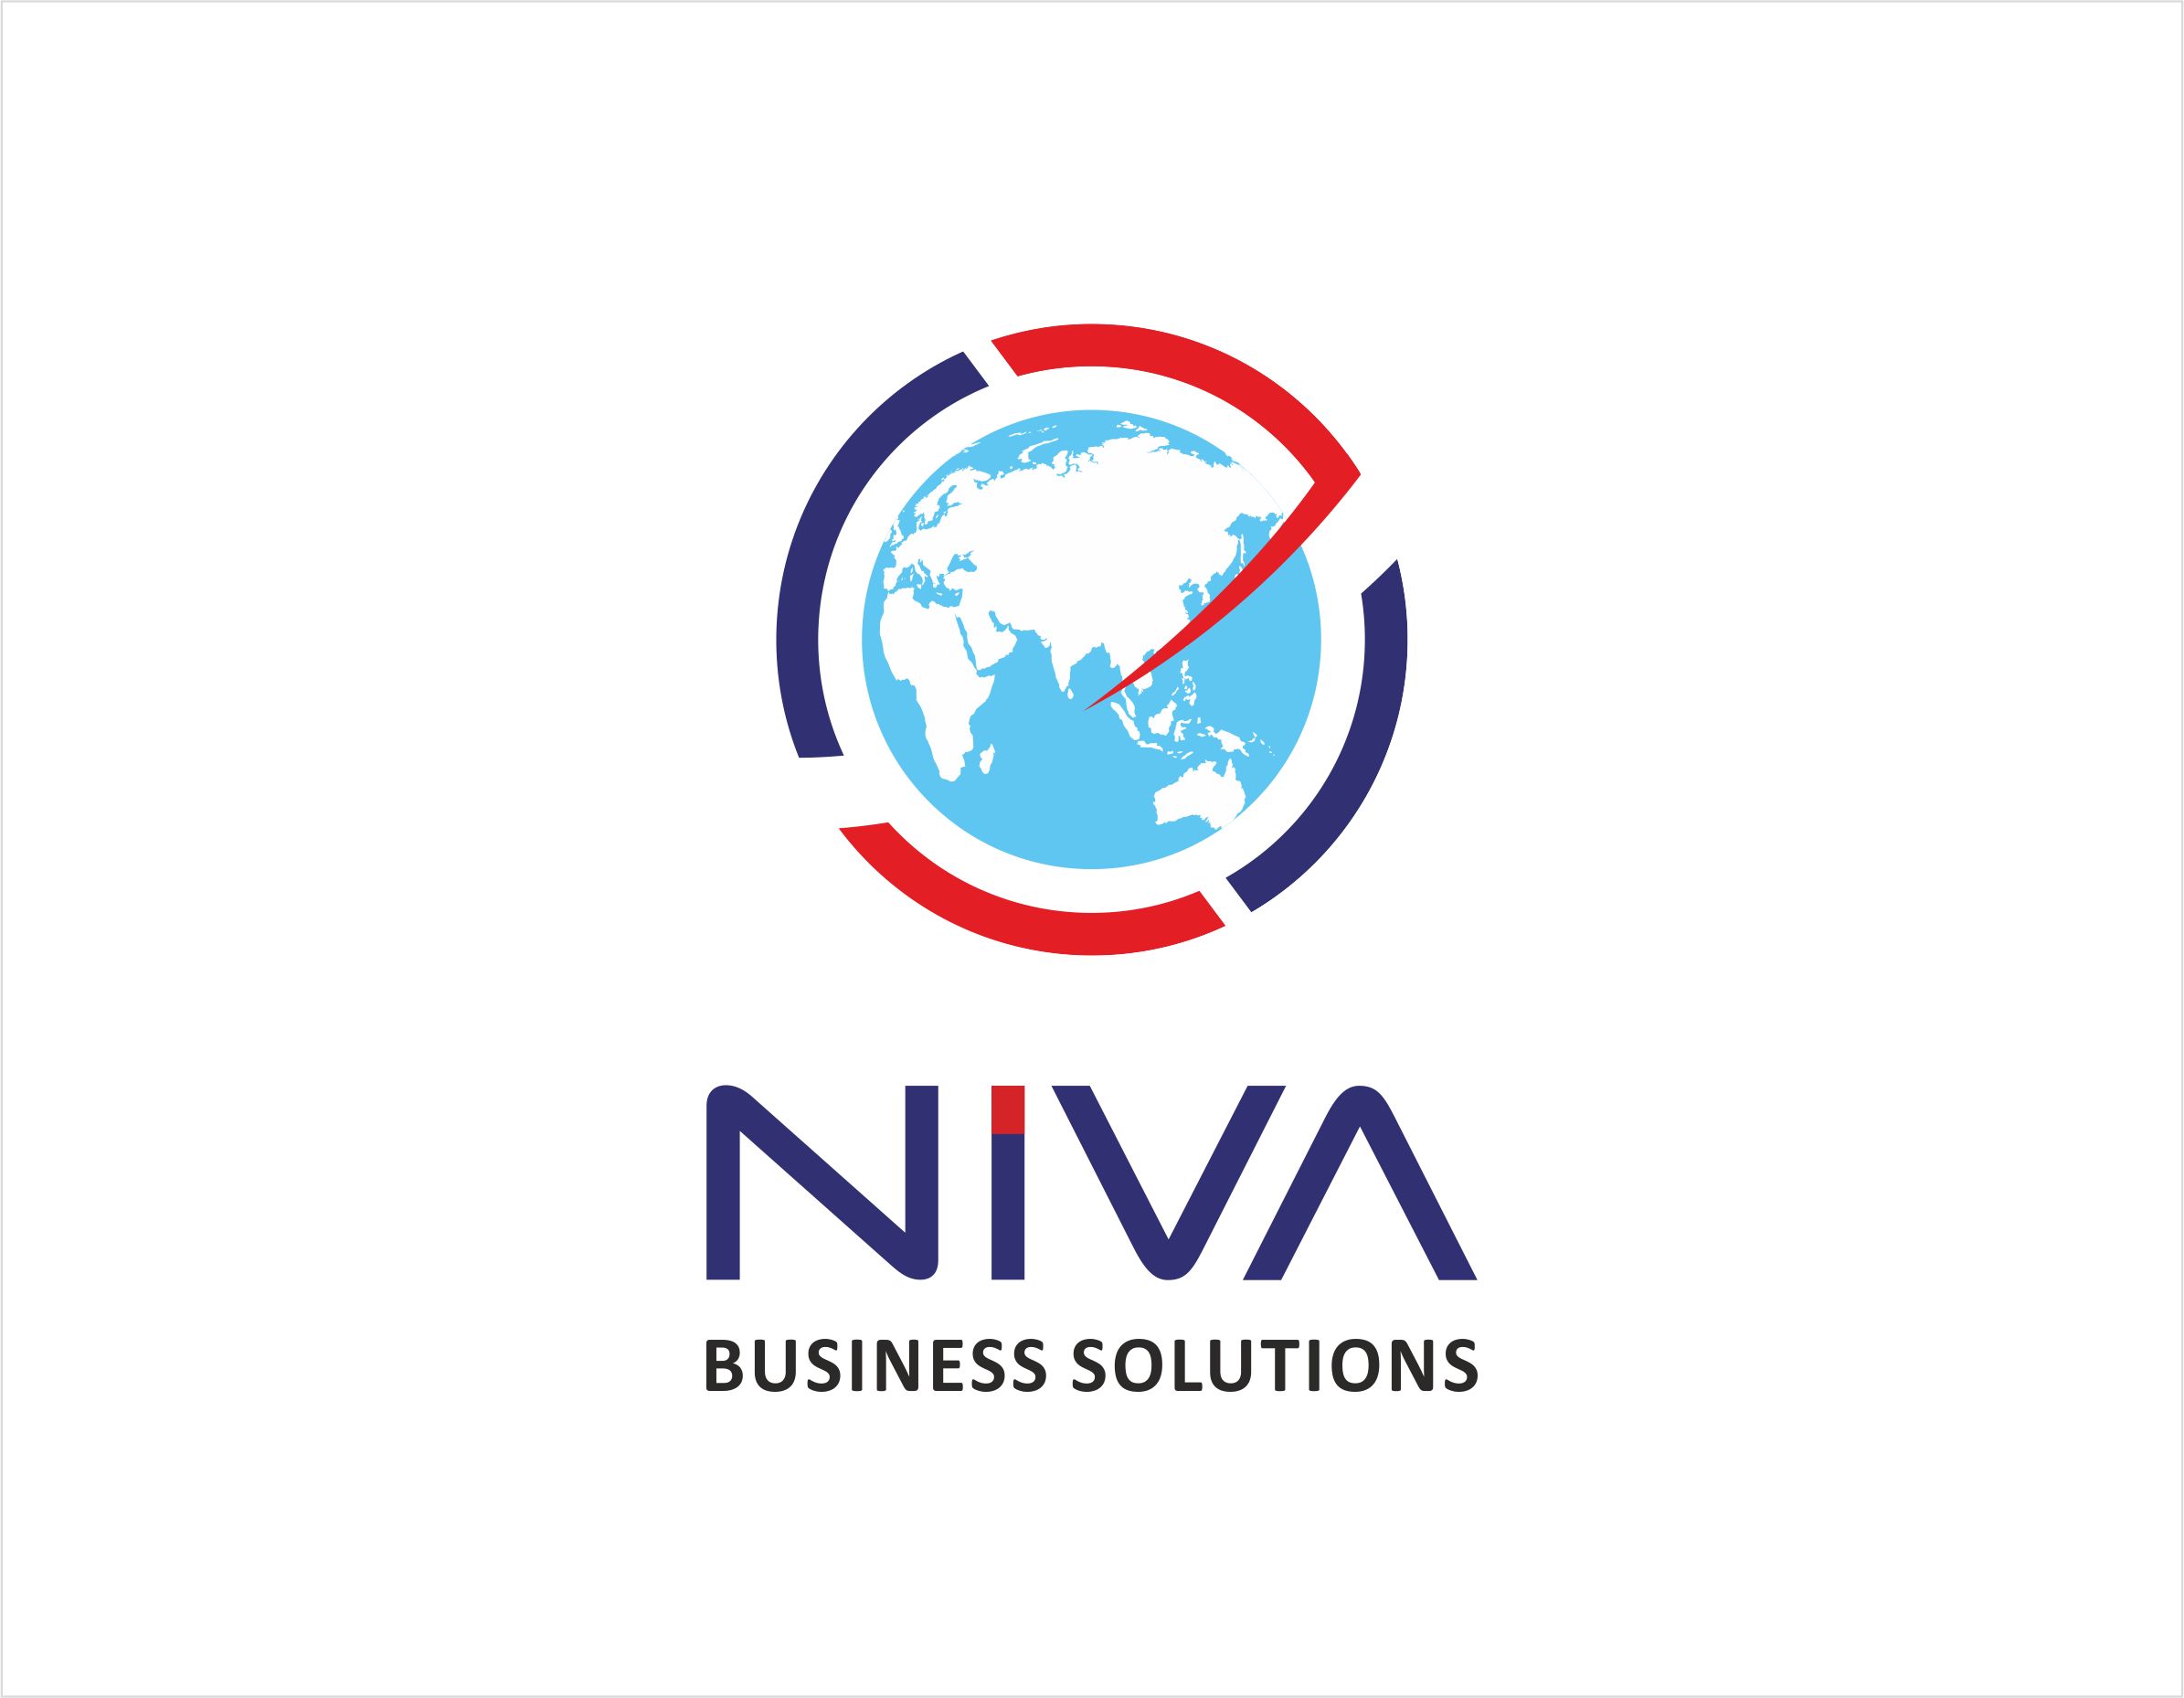 NiVa Business Solutions Ltd